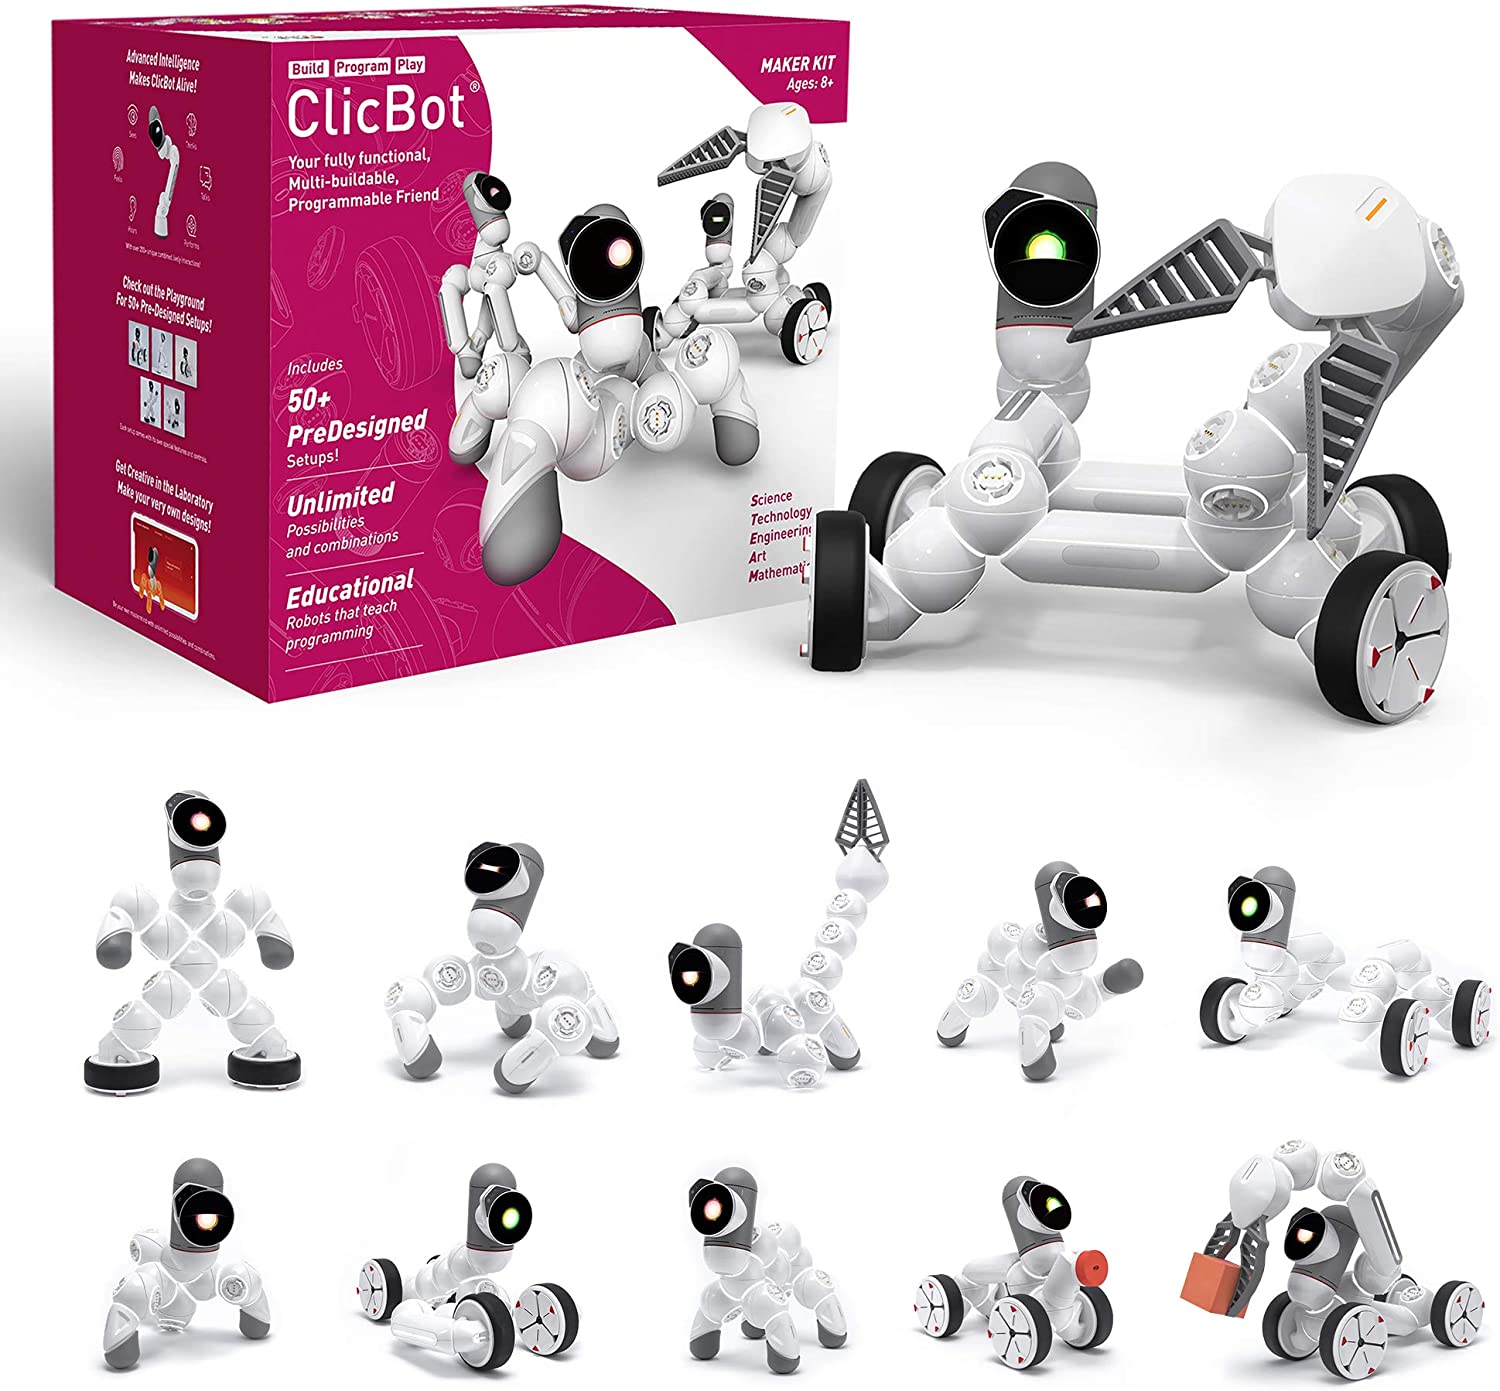 Clicbot. Модульный робот CLICBOT. Робот конструктор CLICBOT - комплект Starter. Интерактивный робот CLICBOT комплект maker Kit. CLICBOT coding Robots.